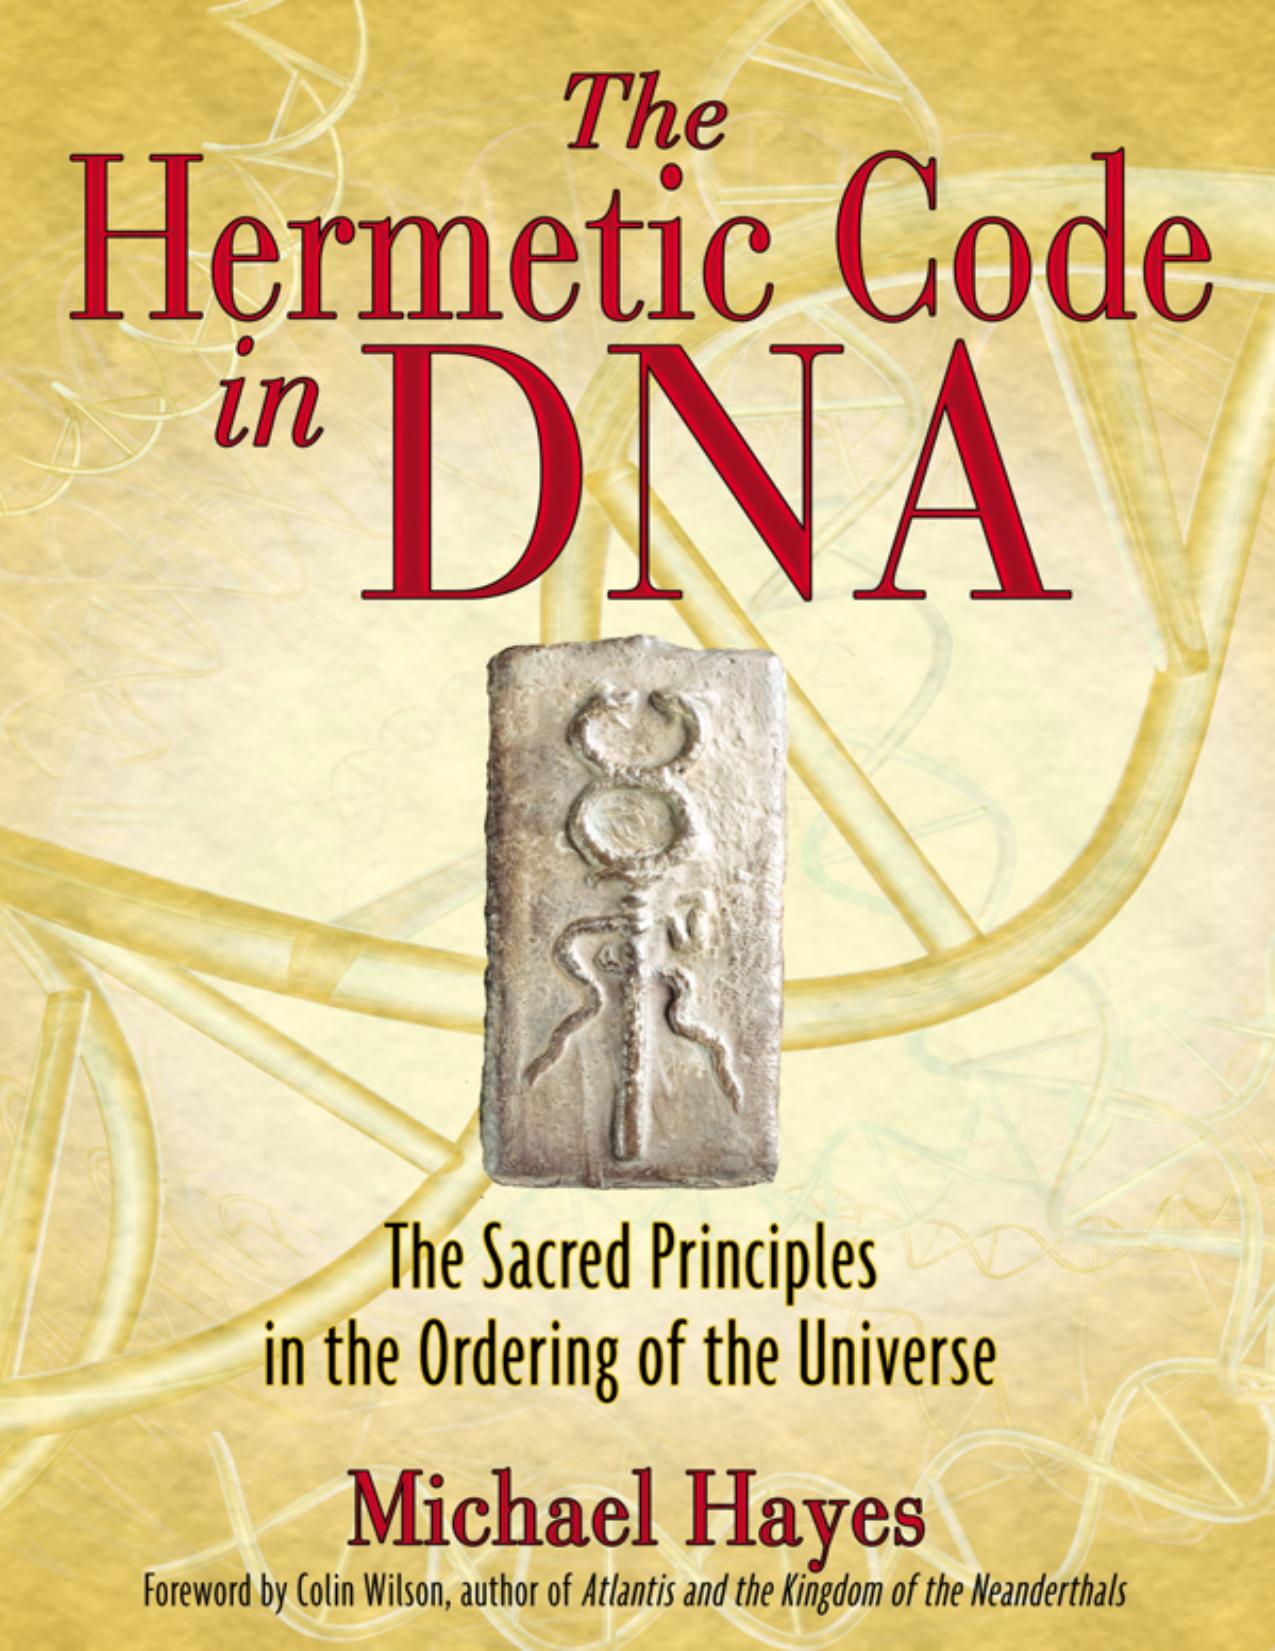 The Hermetic Code in DNA